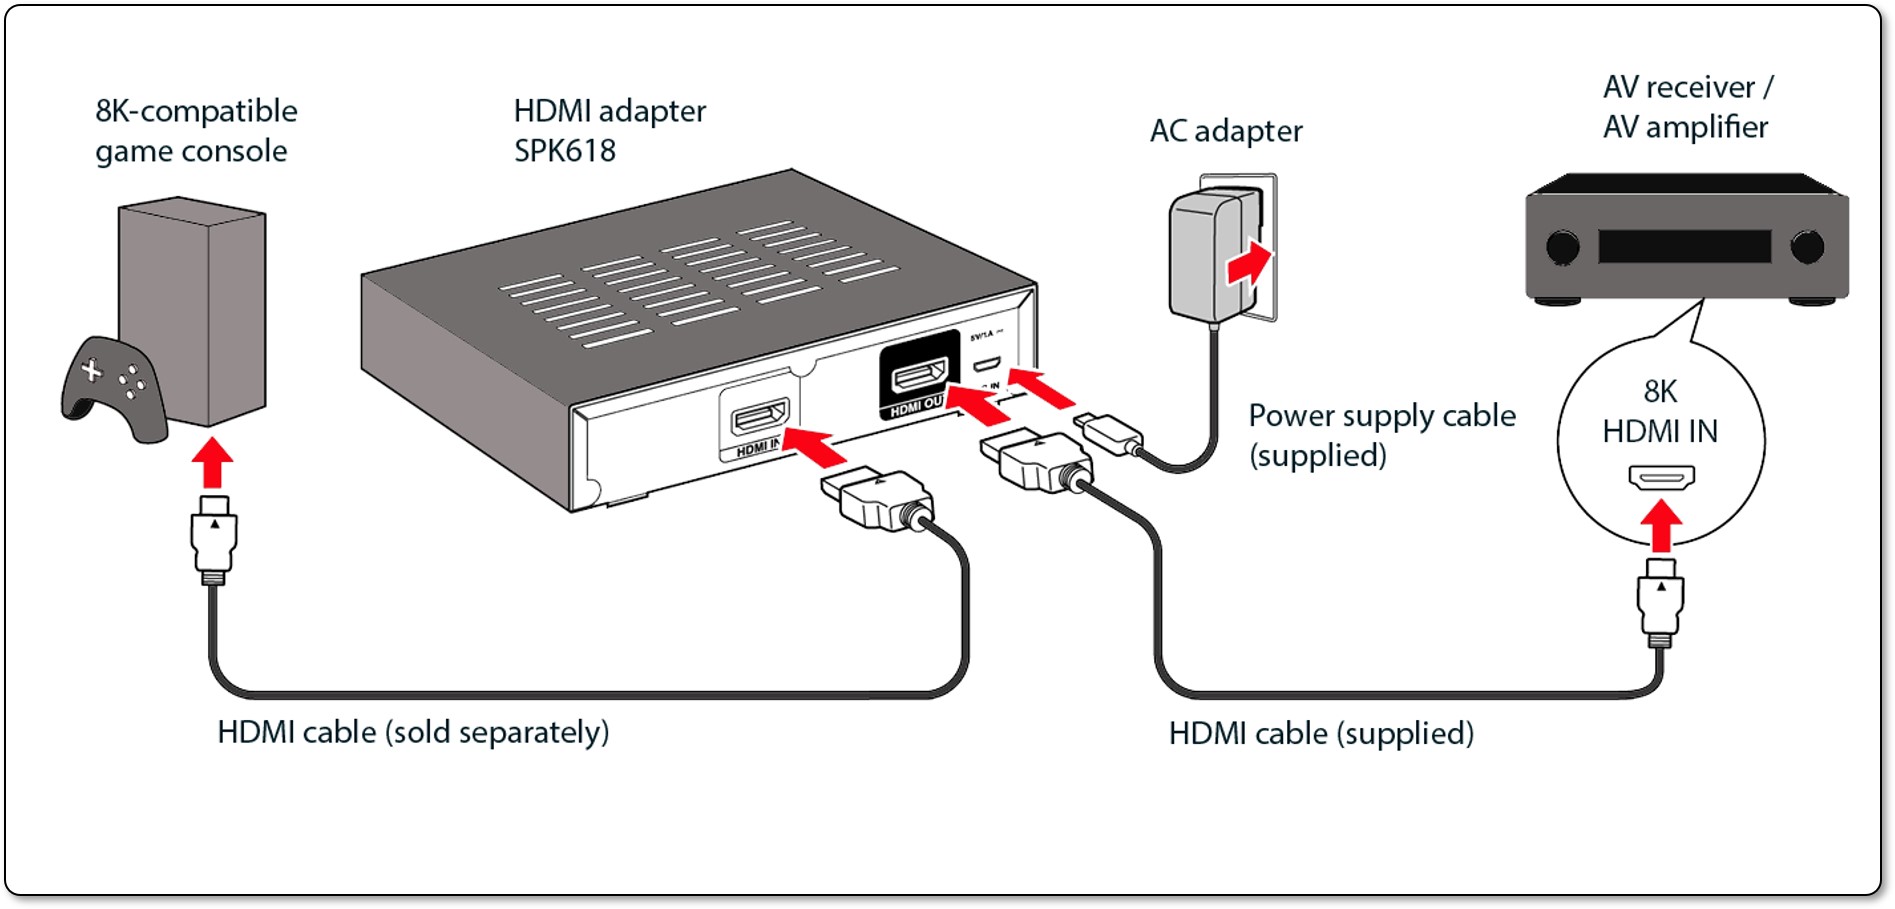 8K/HDMI 2.1 Denon receiver w